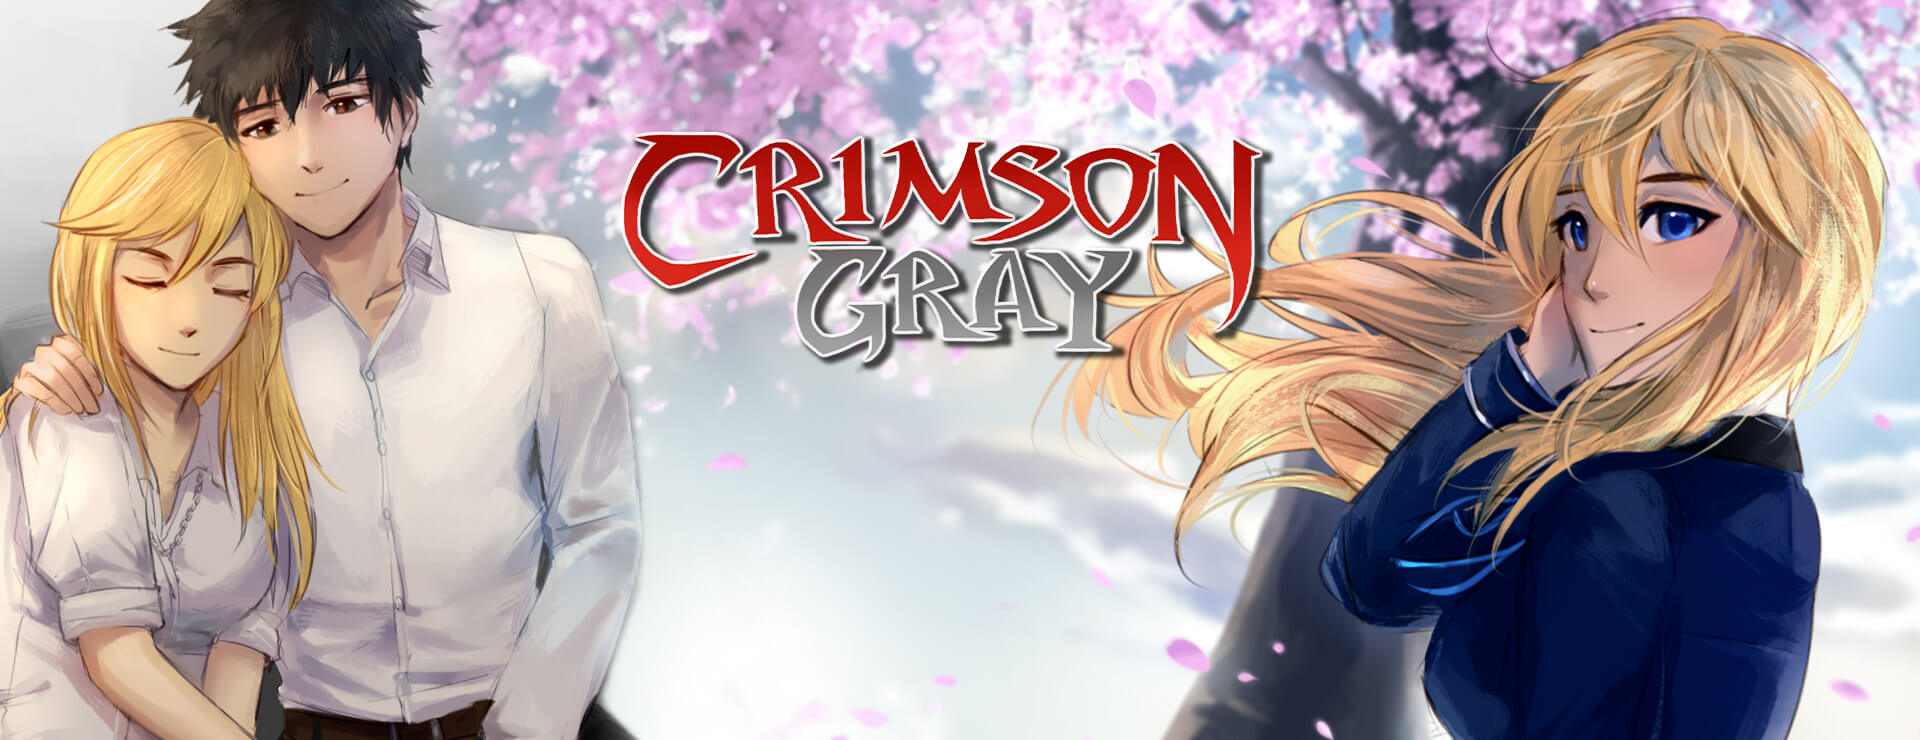 Crimson Gray (SFW Version) - 动作冒险游戏 遊戲